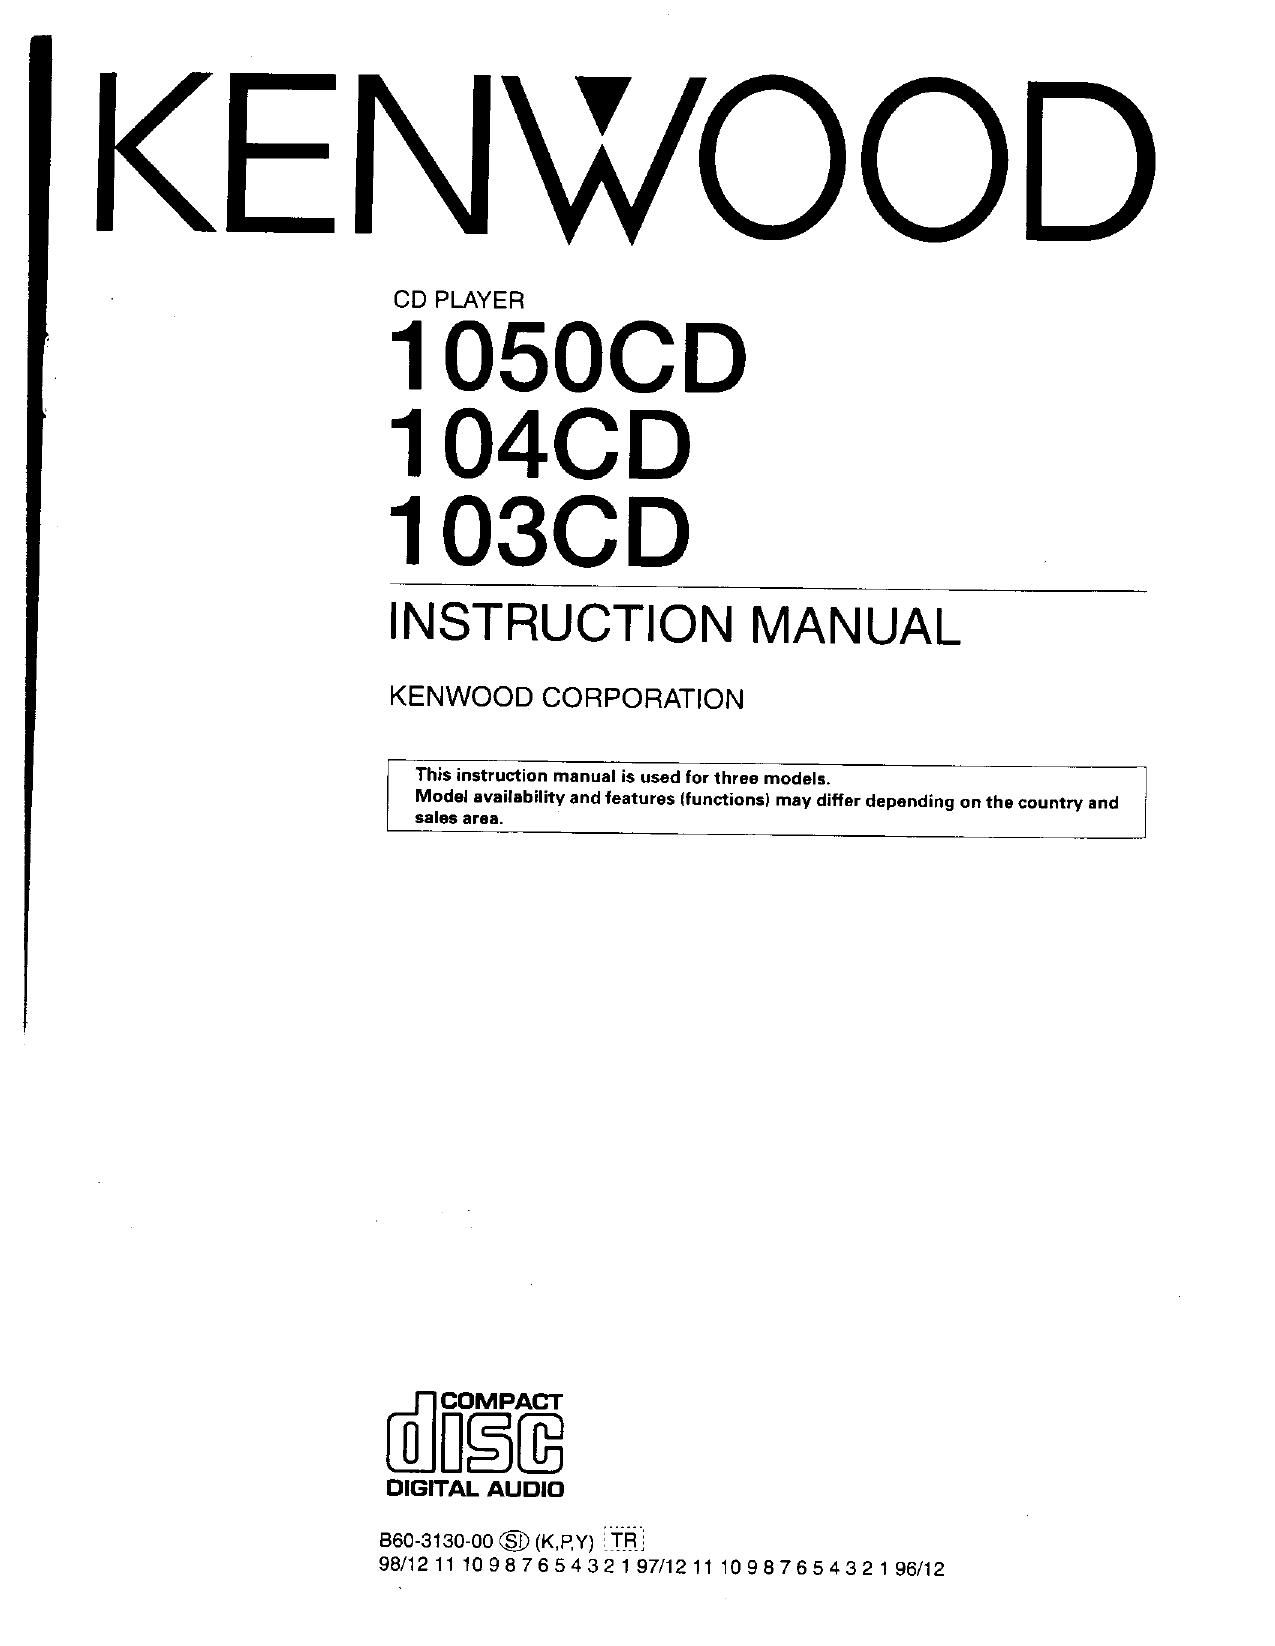 Kenwood 103 CD Owners Manual